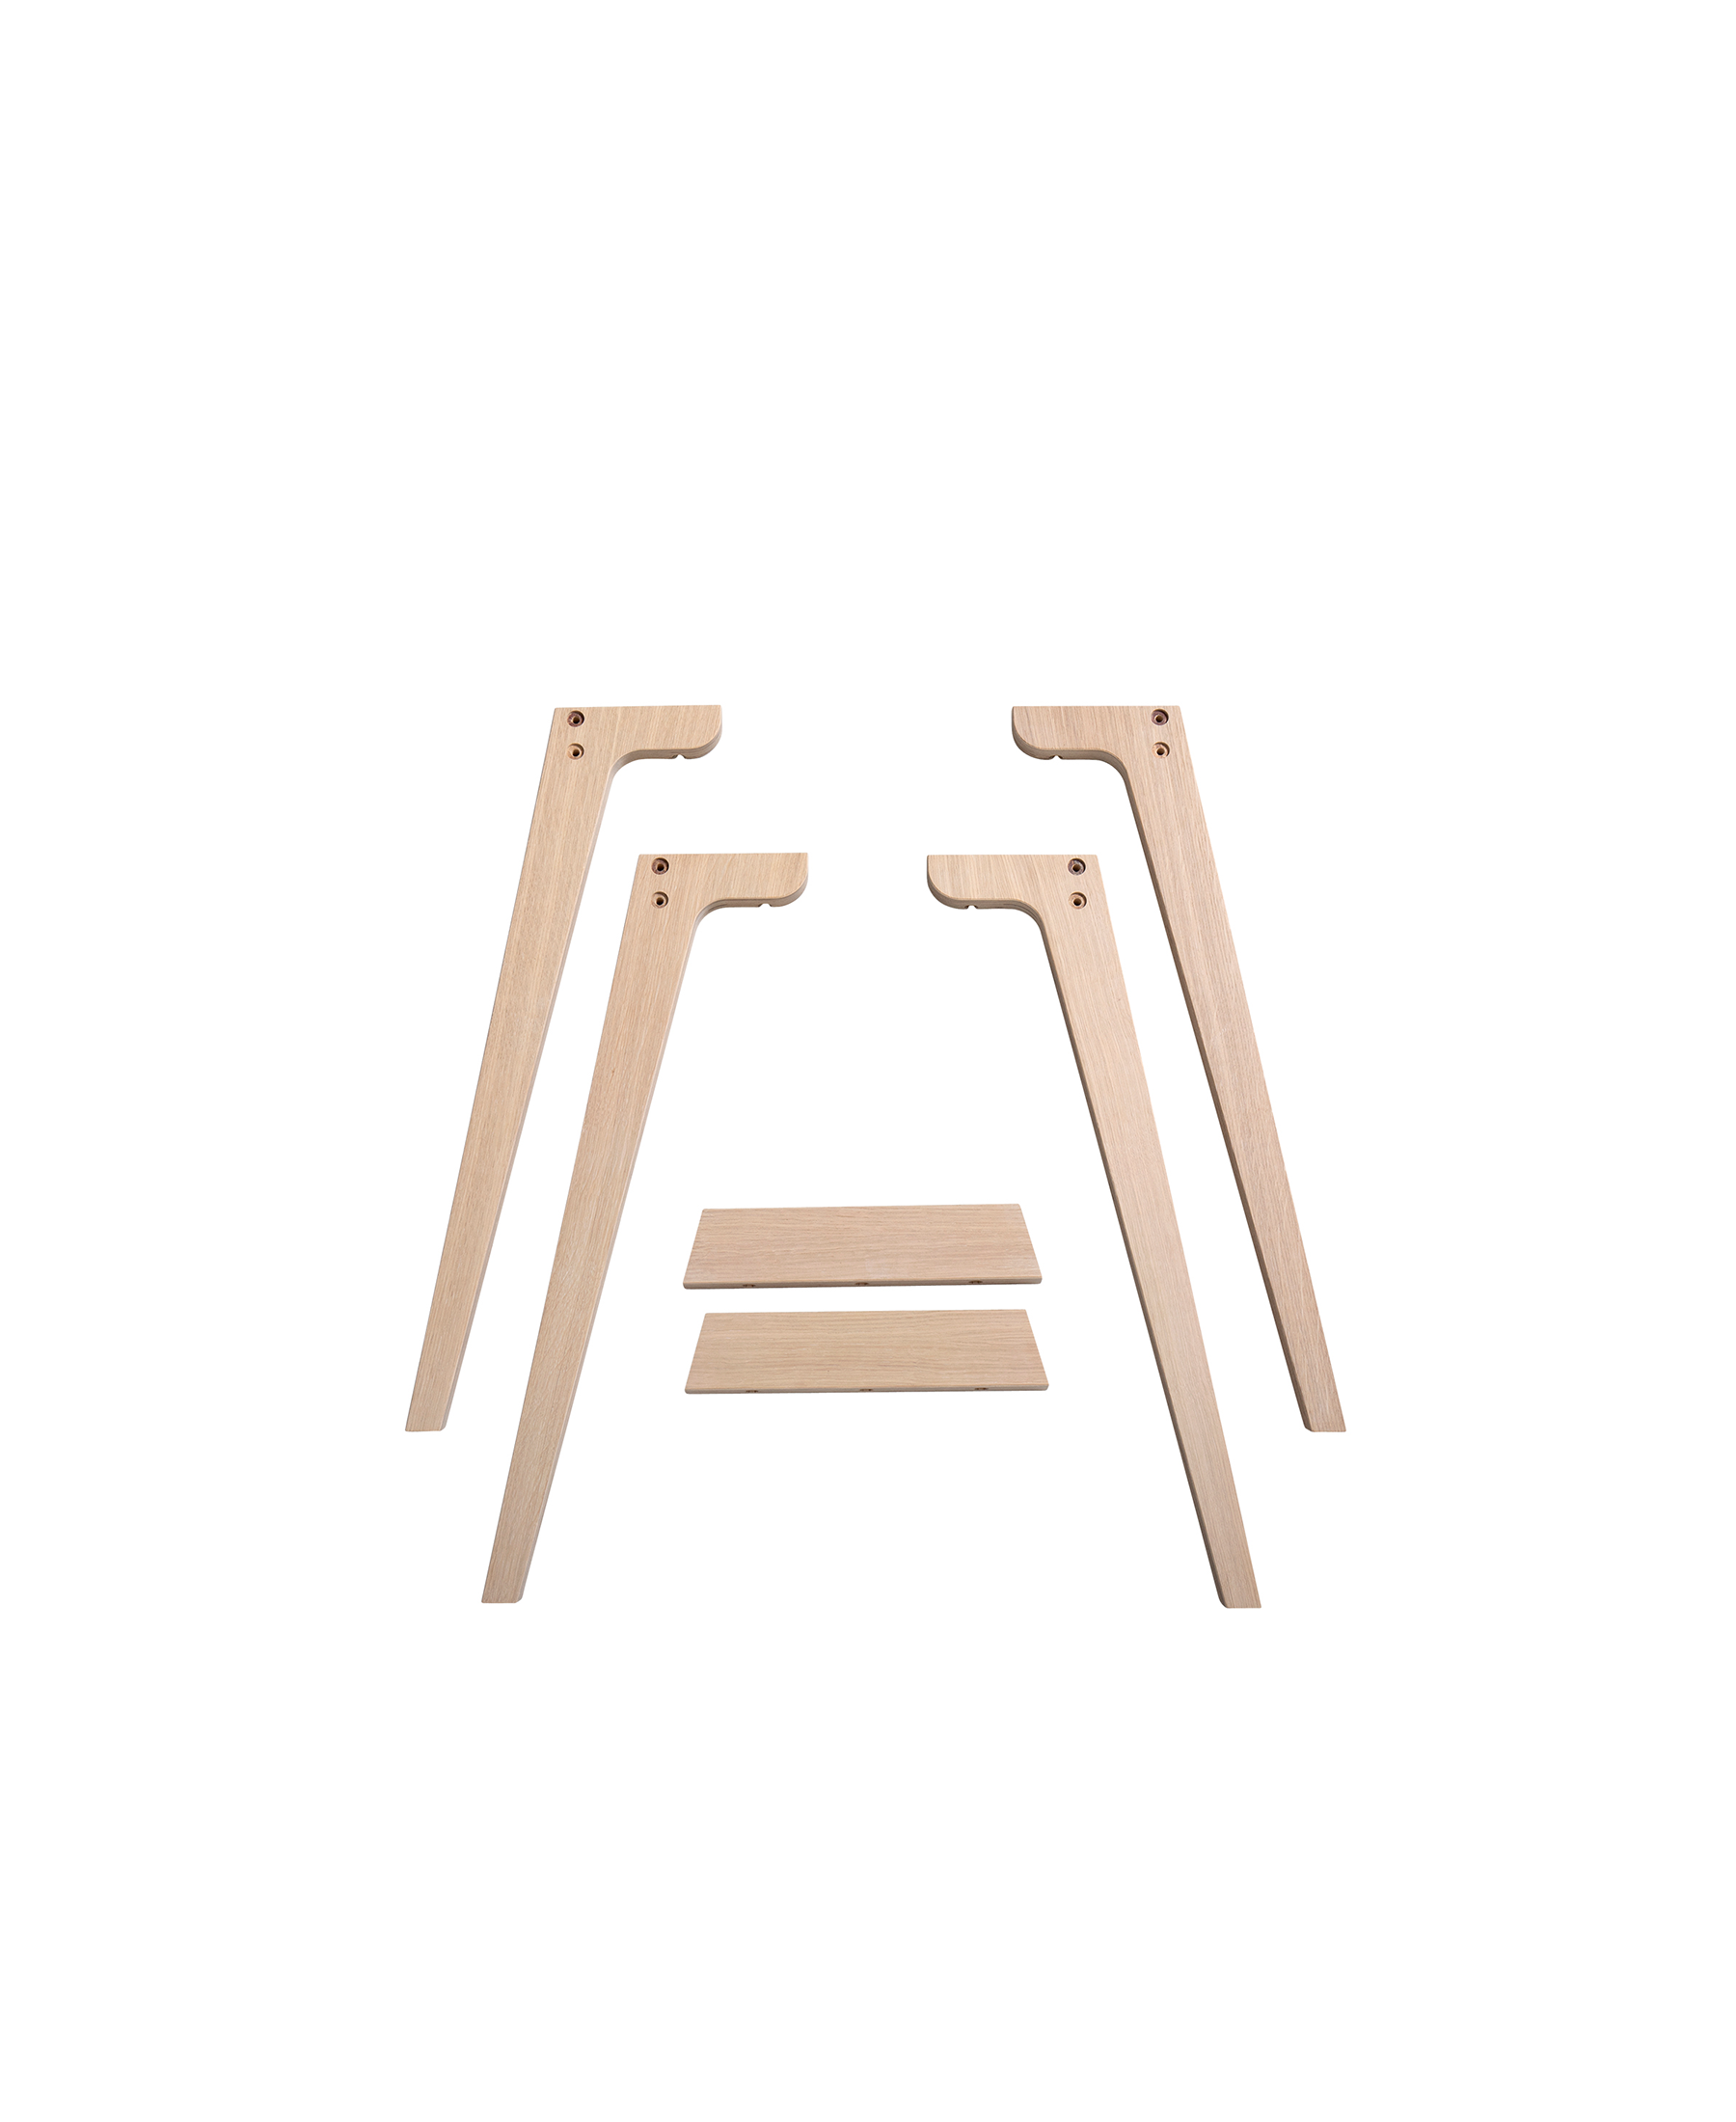 Adult (72.6cm) legs for wood desk by Oliver Furniture